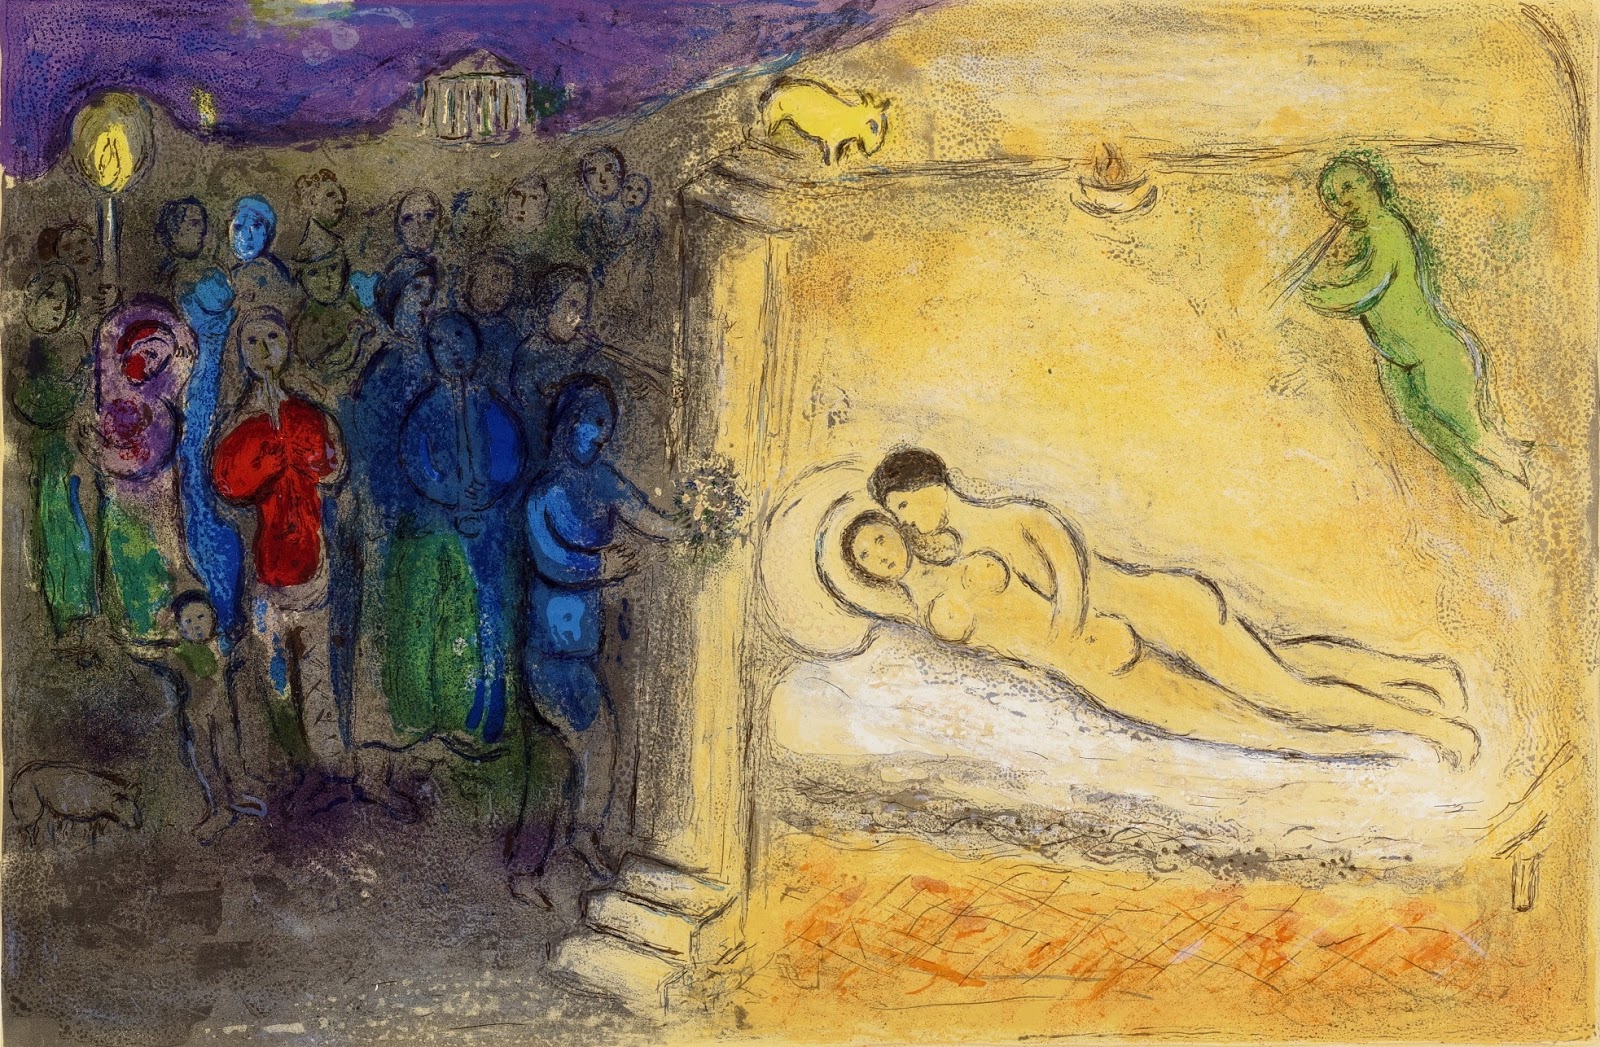 Marc+Chagall-1887-1985 (241).jpg